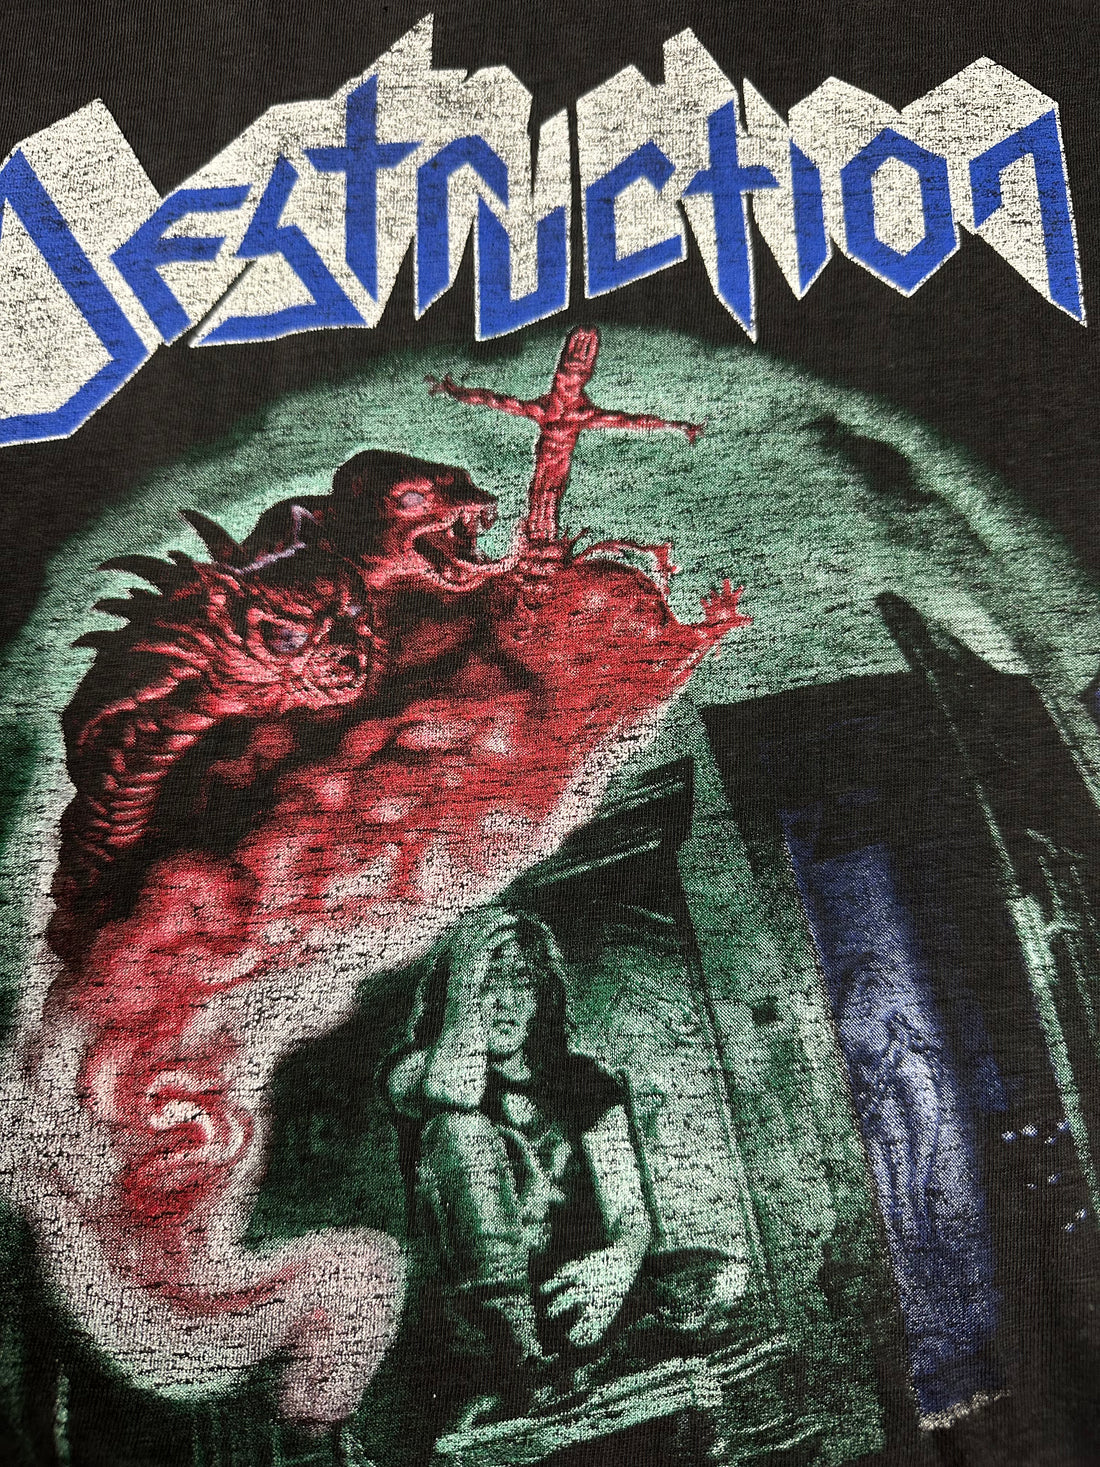 Destruction 1990 Cracked Brain Vintage T-Shirt